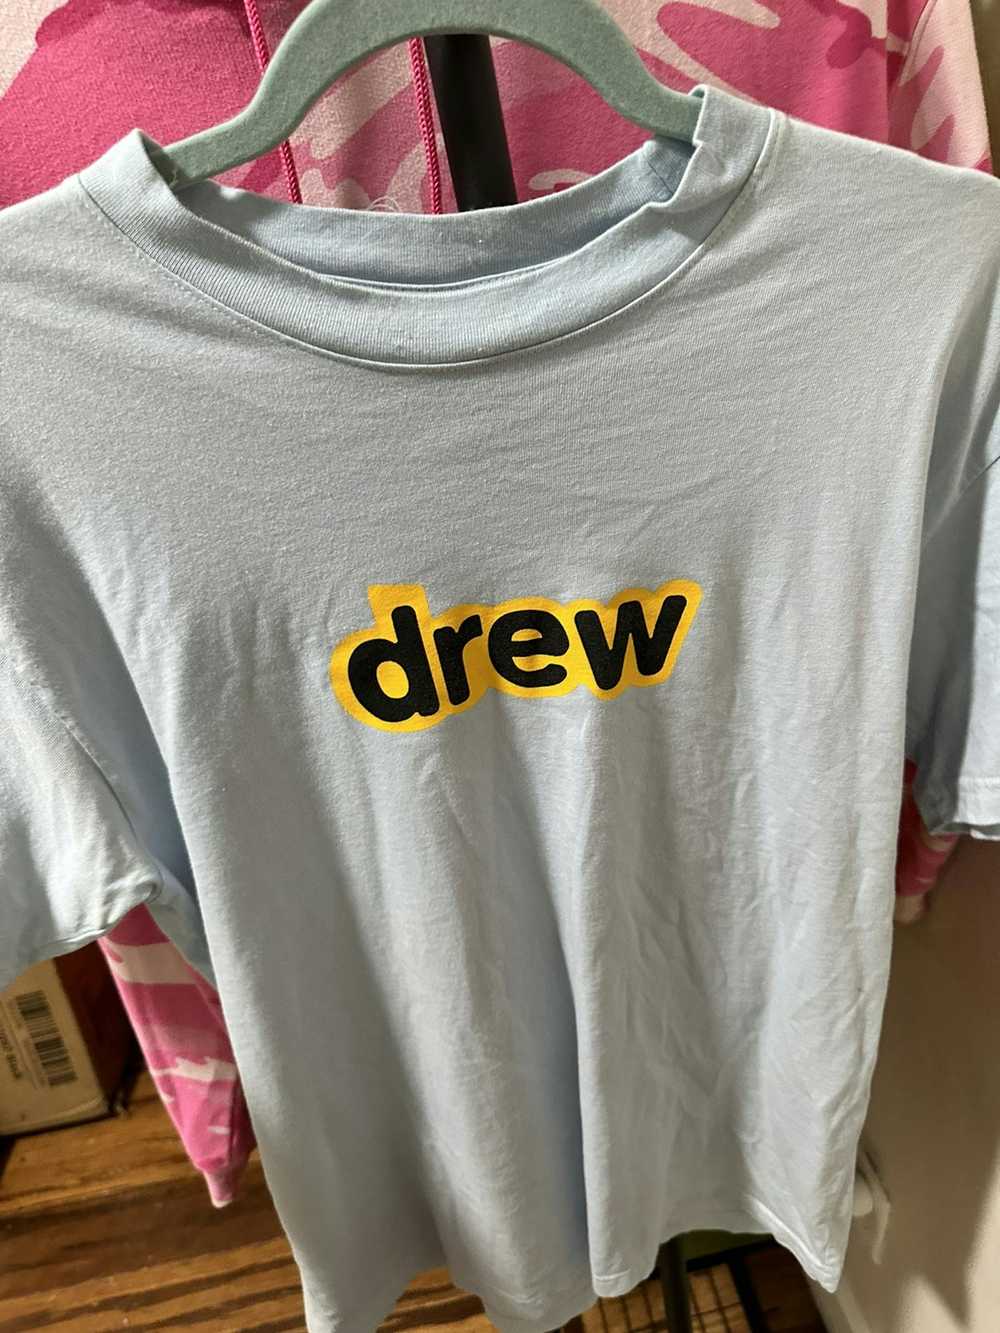 Drew House Drew house t shirt - image 1